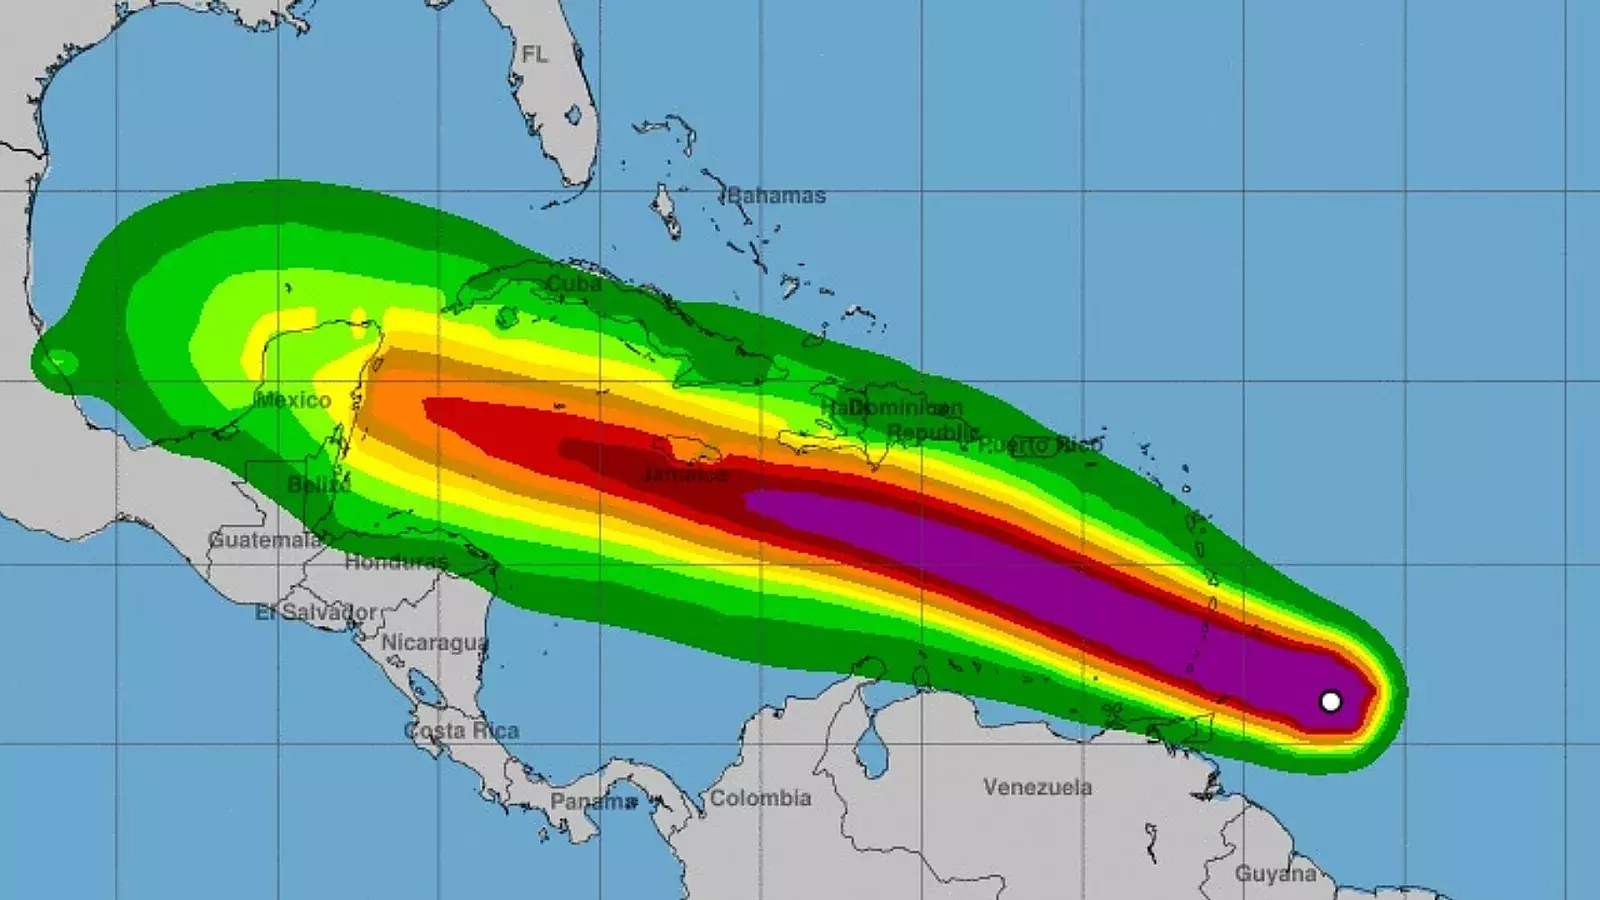 Beryl, huracán camino al Caribe